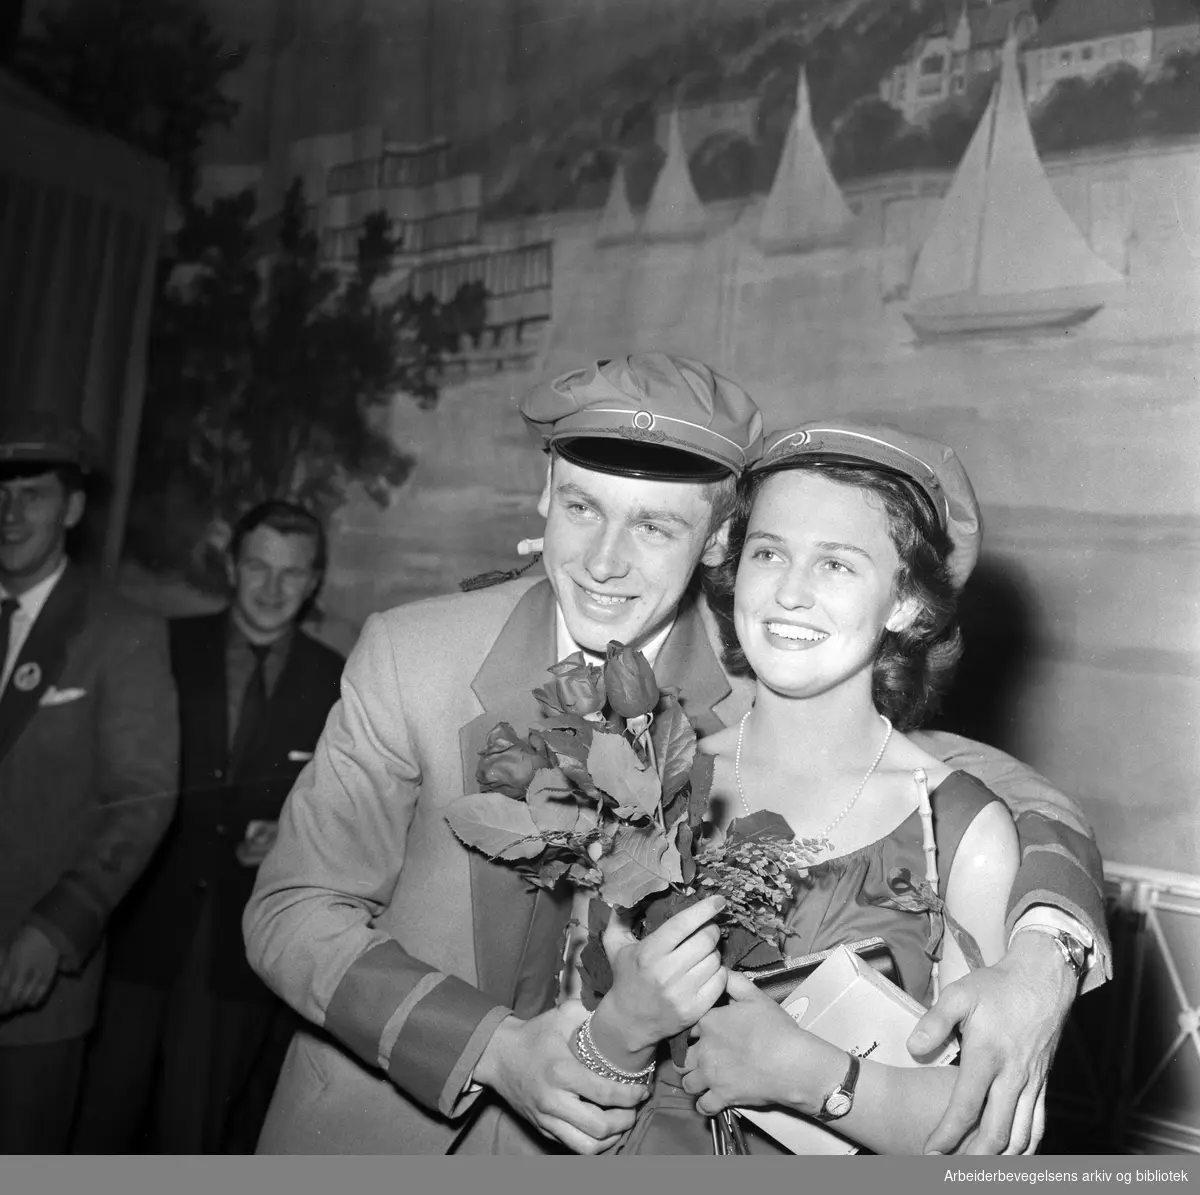 Årets russeprinsesse Nina Svendsen kåret på restaurant Regnbuen, 21. Mai 1958. Med russepresident Per Musæus.